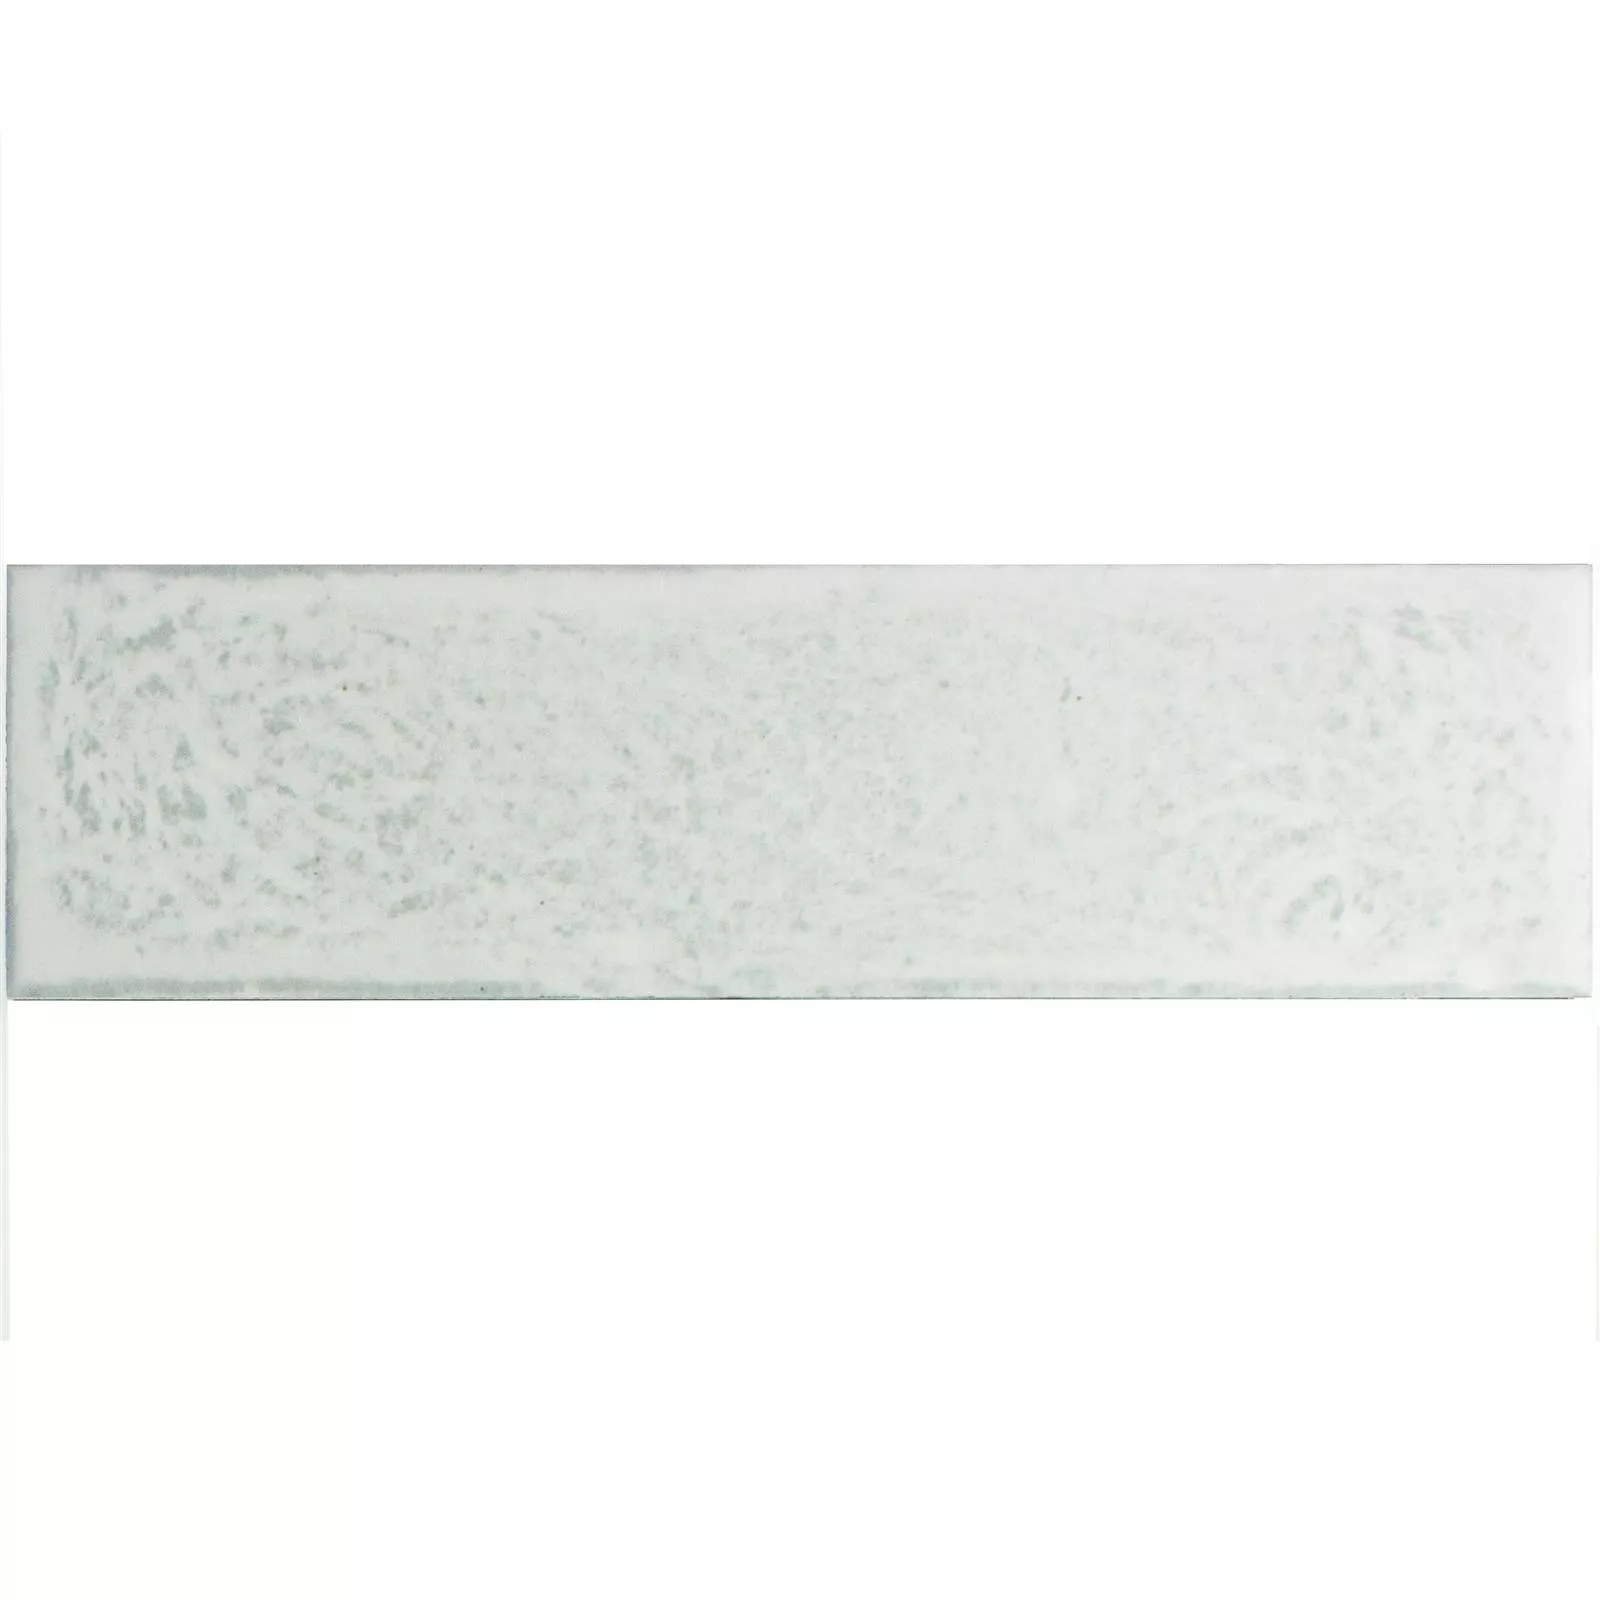 Échantillon Carrelage Mural Open Air Ondulé 6x24cm Blanc